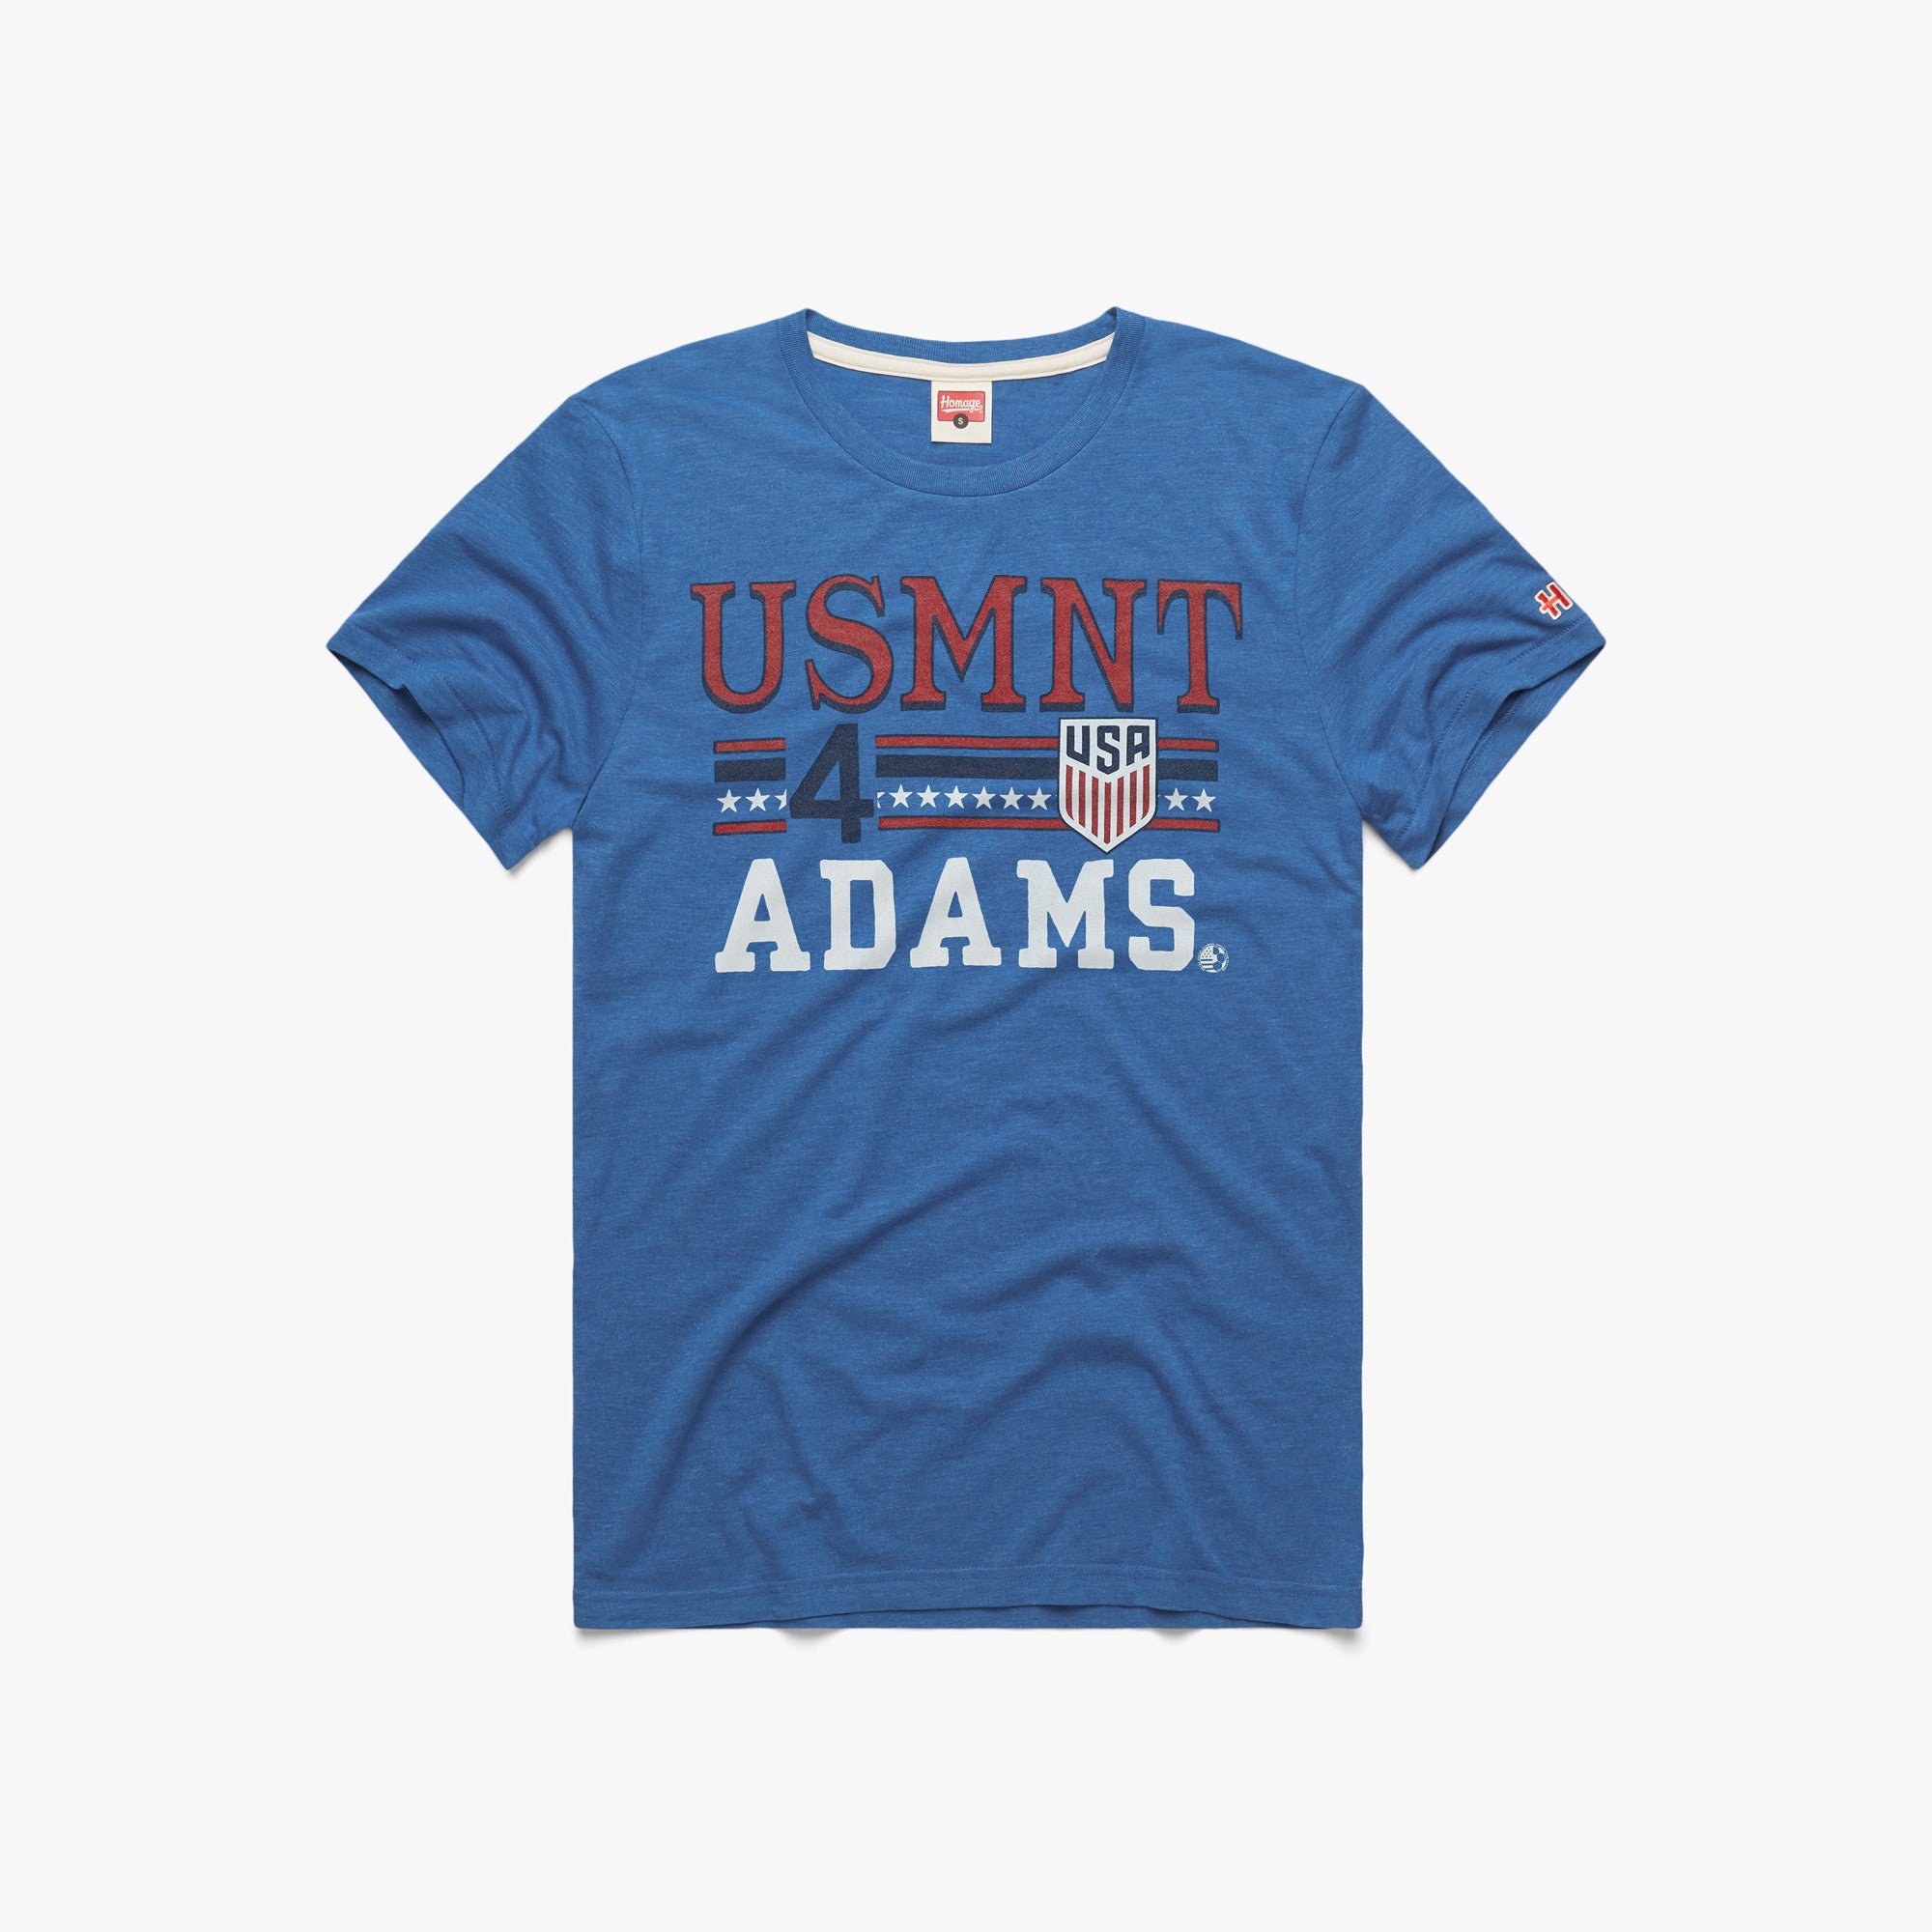 USMNT Adams Jersey